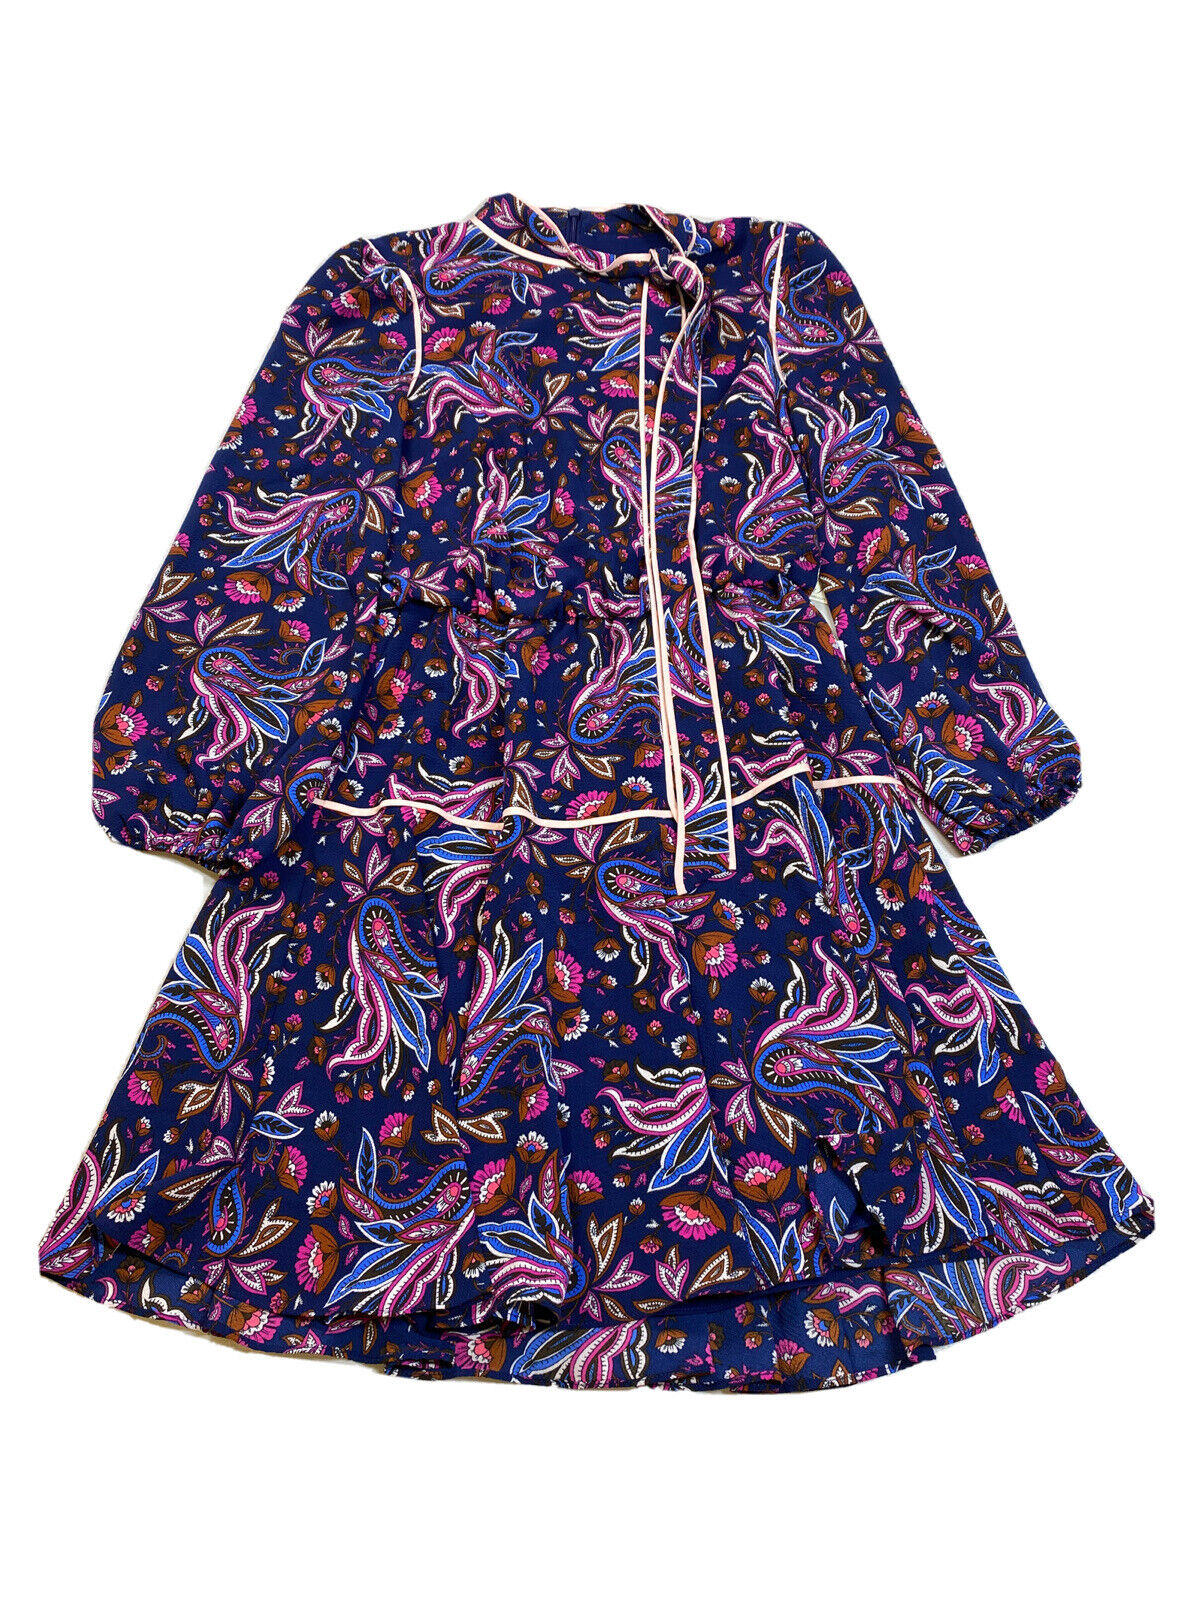 NEW Eliza J Women's Blue Floral Long Sleeve Fit & Flare Dress - 4 Petite